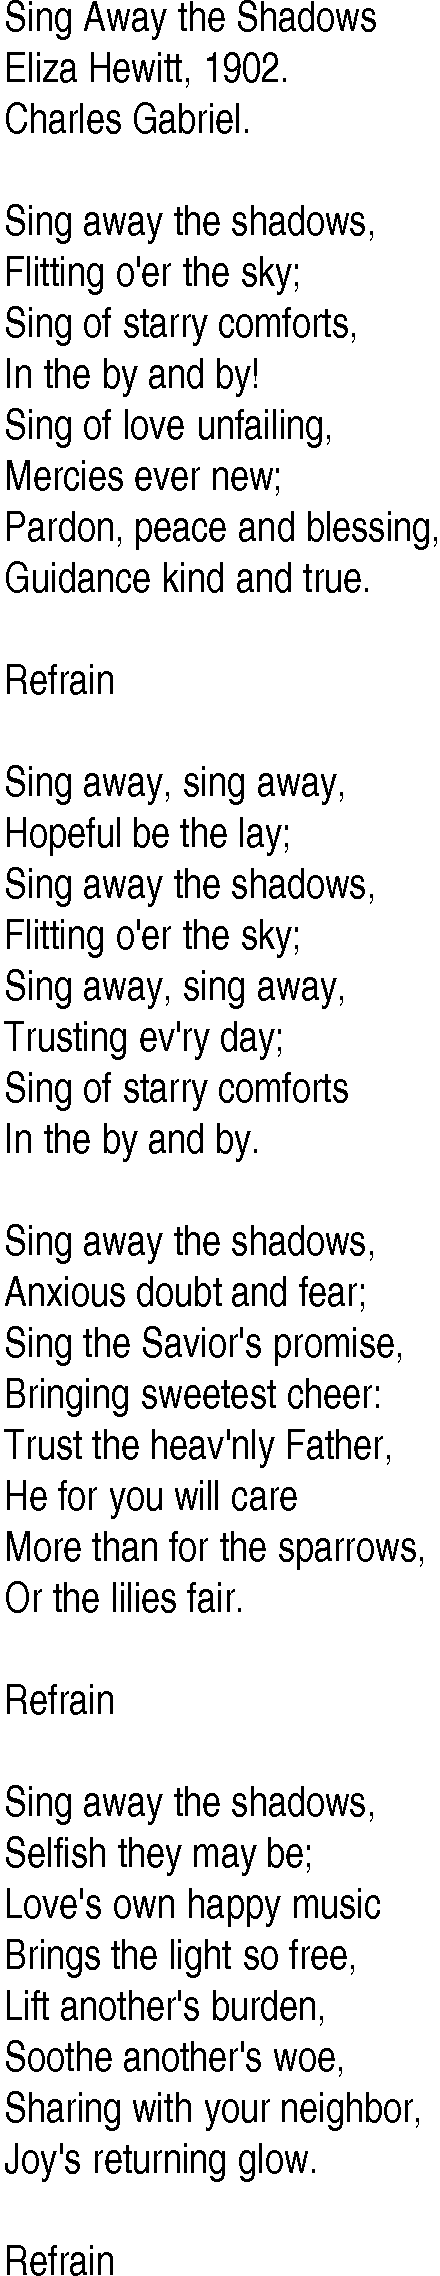 Hymn and Gospel Song: Sing Away the Shadows by Eliza Hewitt lyrics